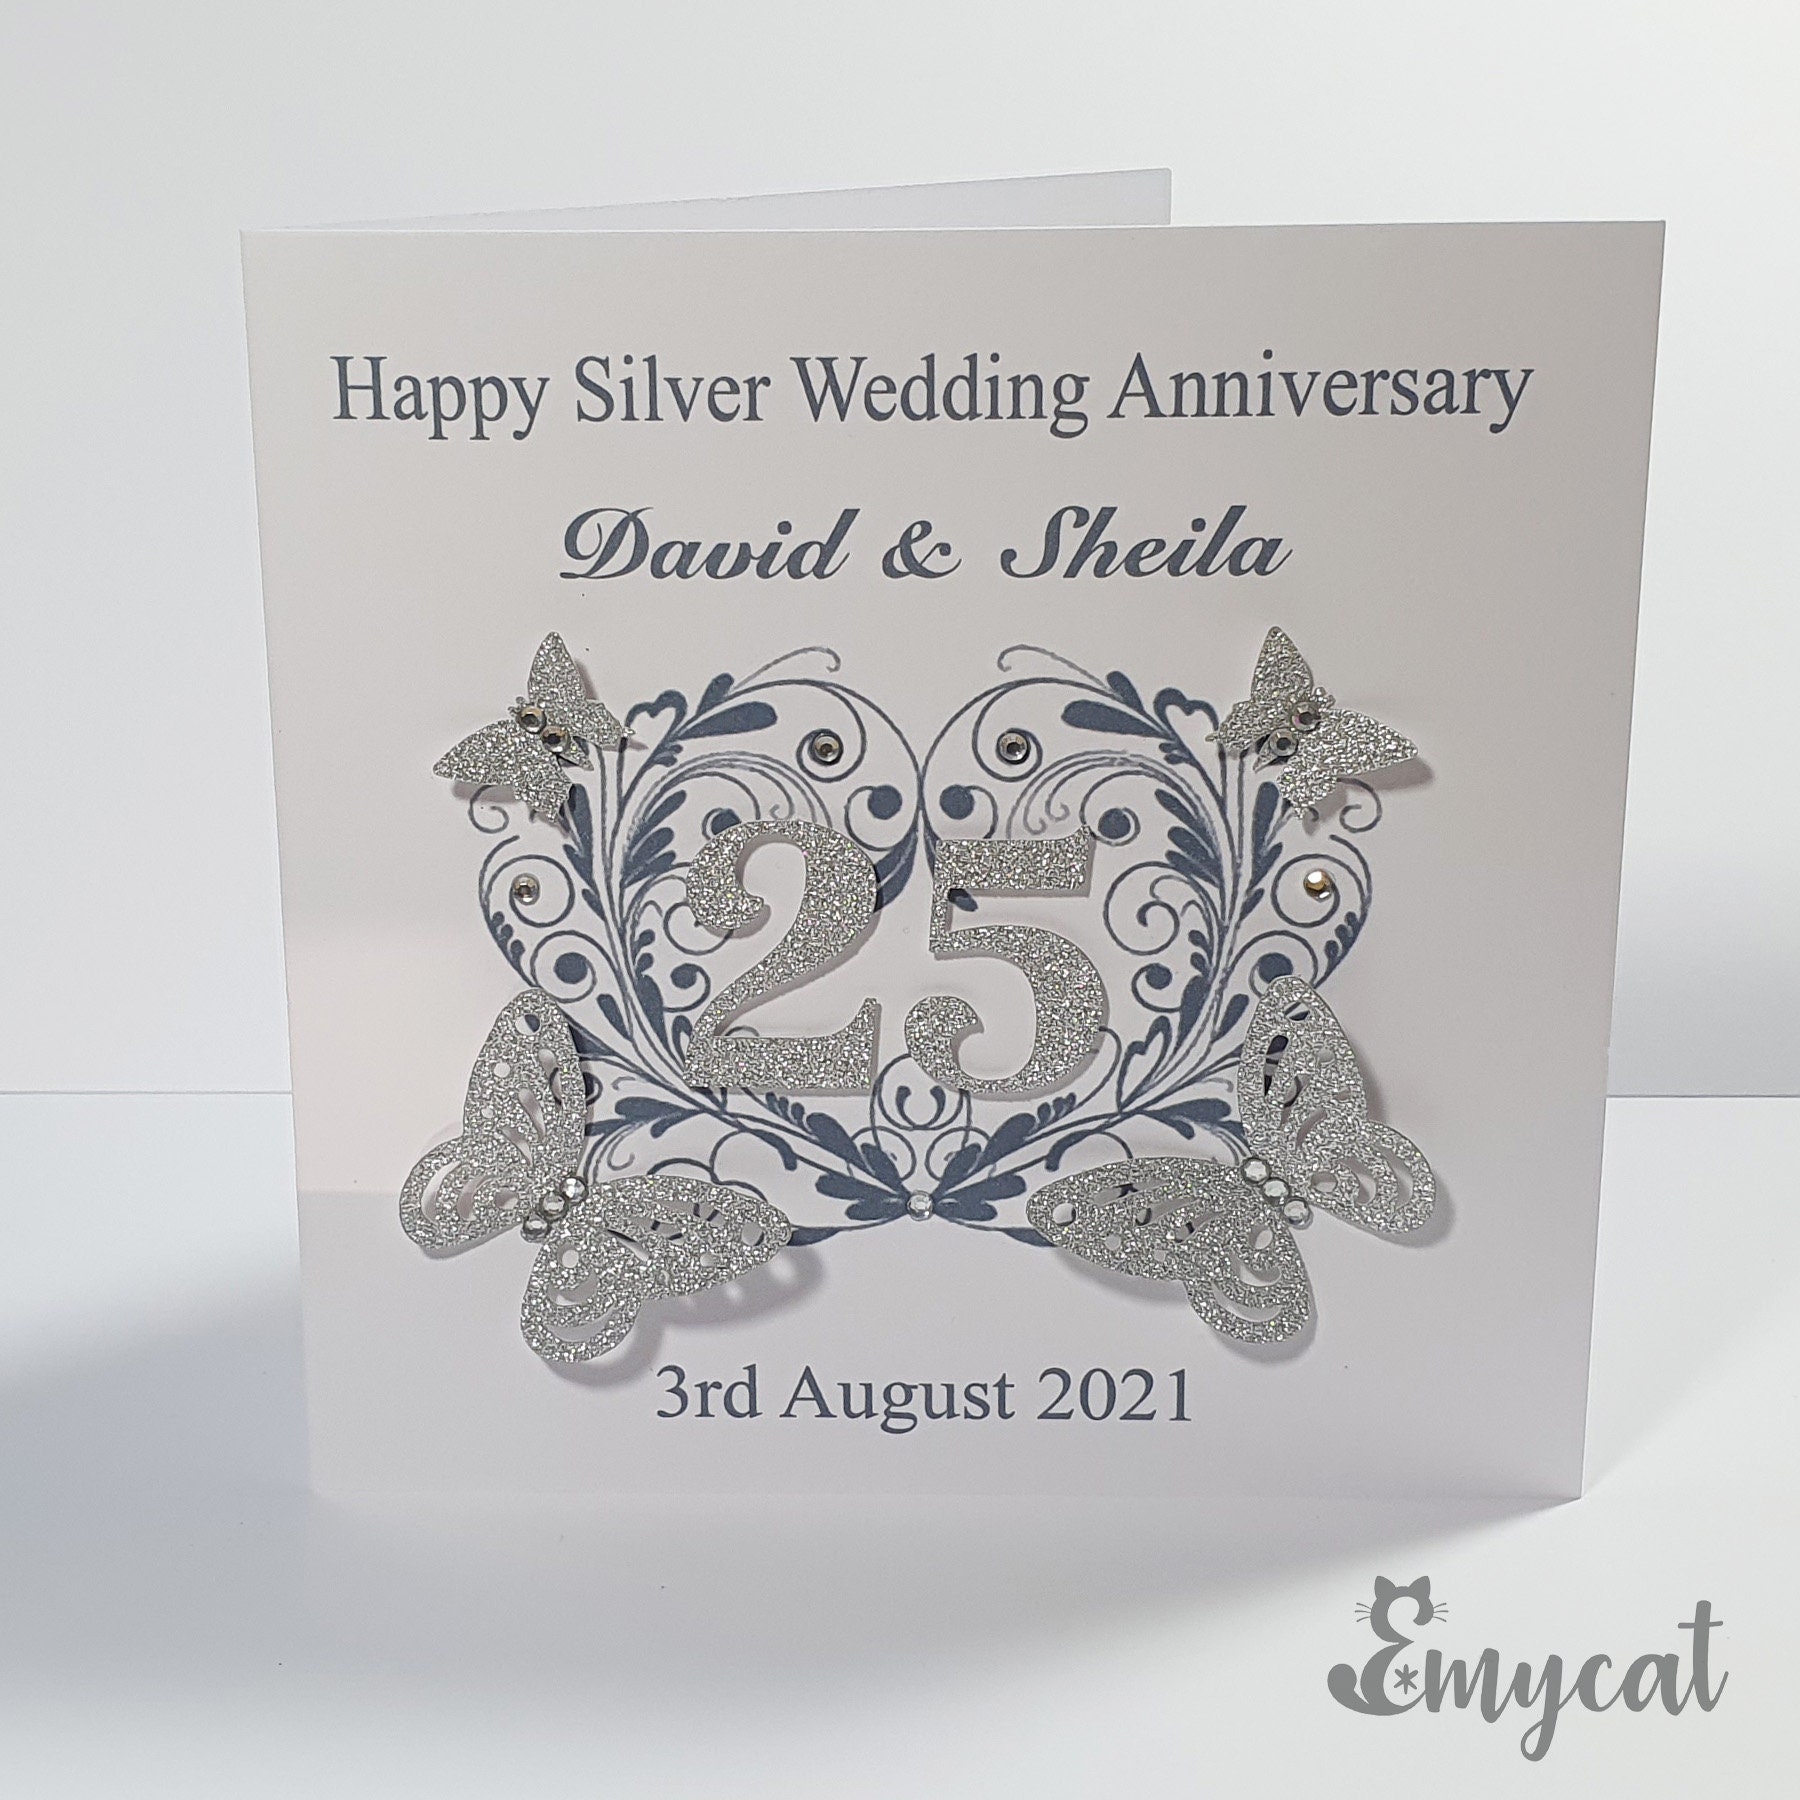 Personalised Handmade Silver Wedding Anniversary Card 25th Etsy